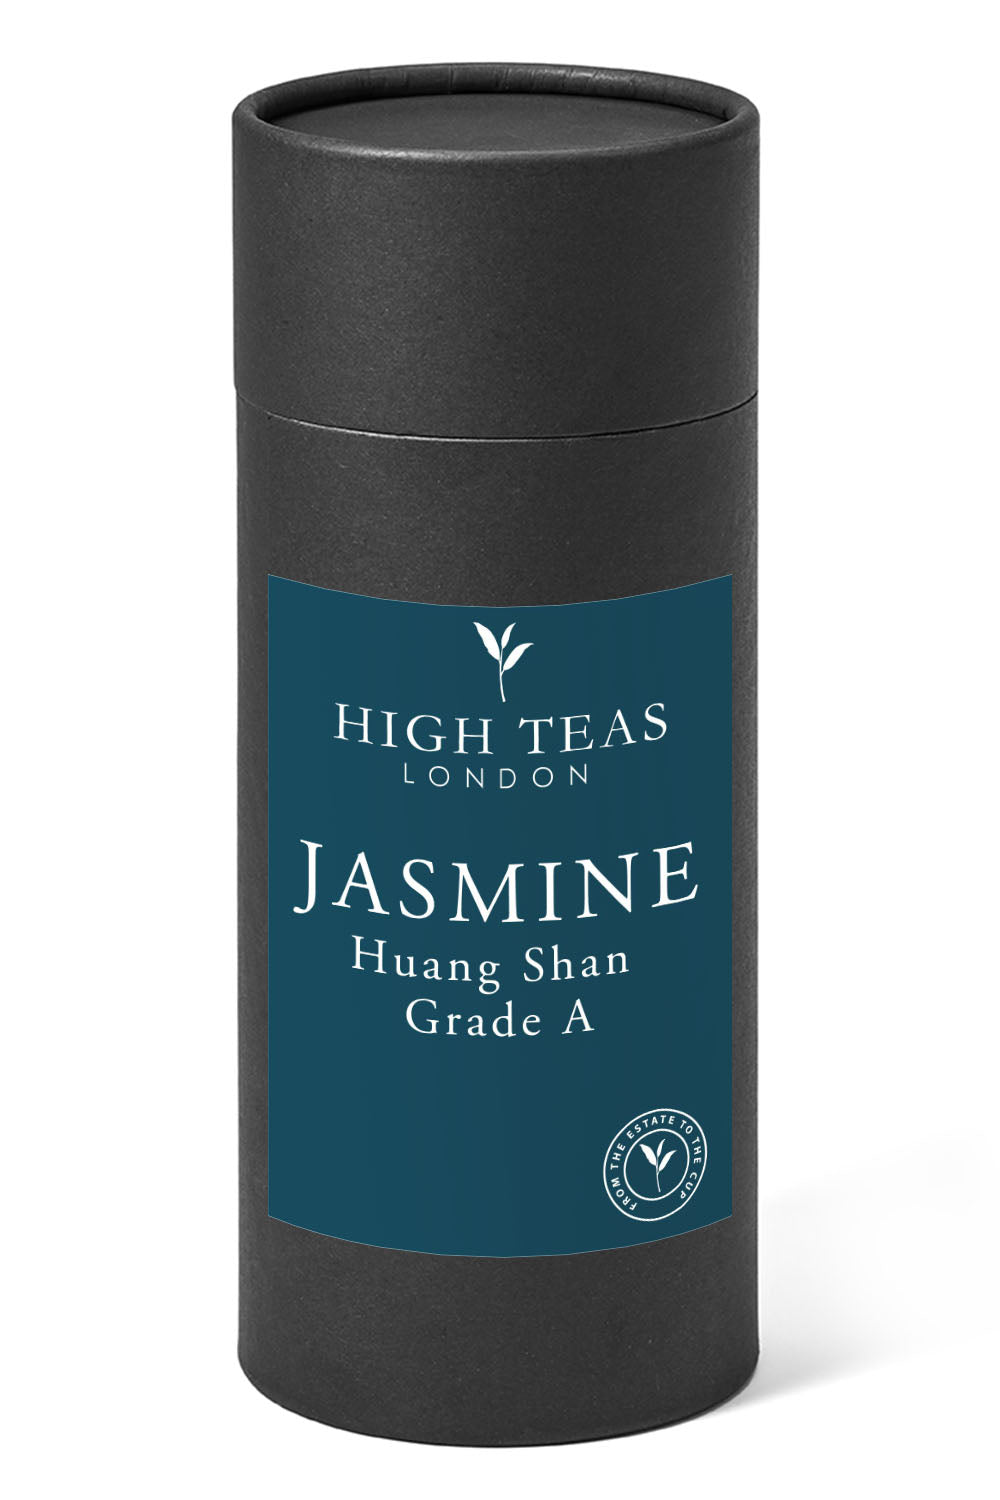 Jasmine Huang Shan Ya Grade A-150g gift-Loose Leaf Tea-High Teas